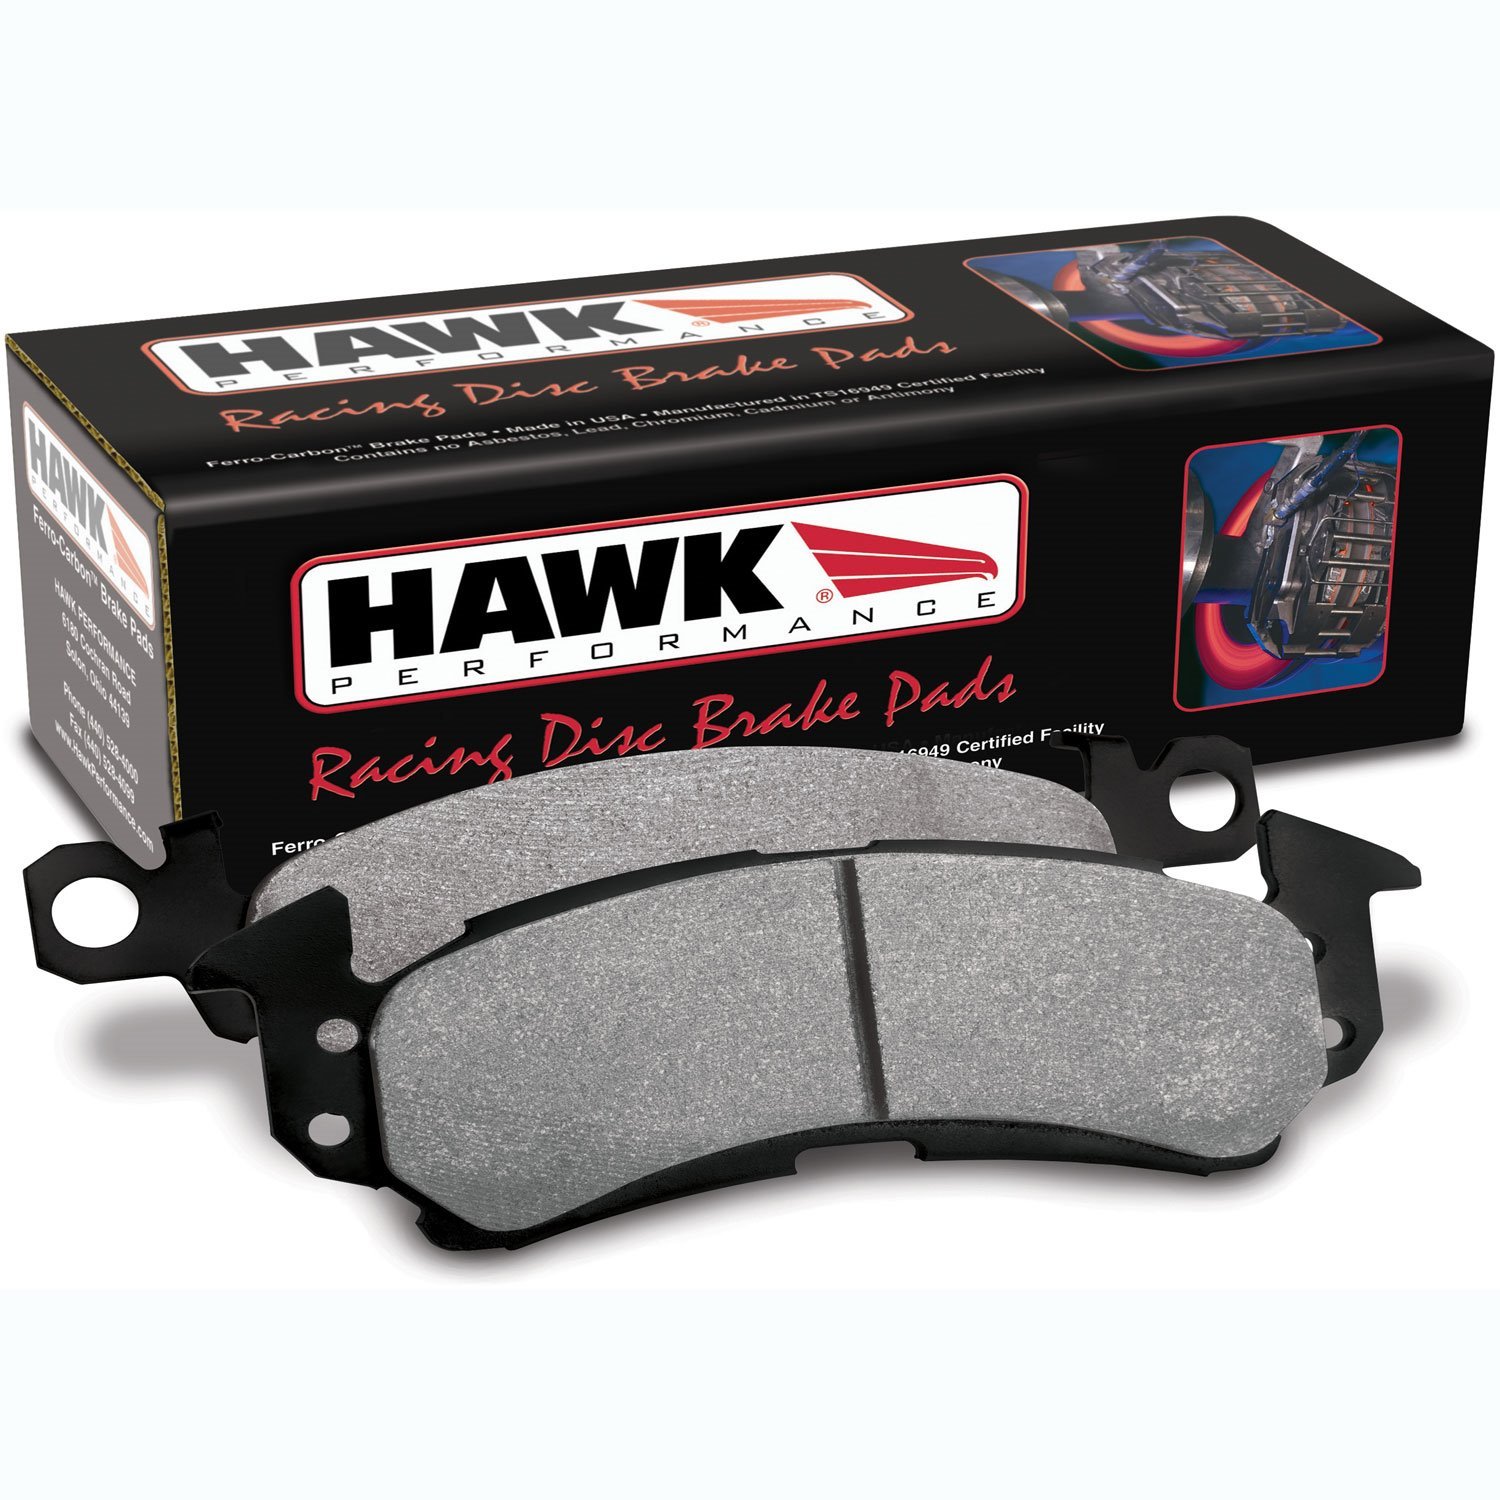 Disc Brake Pad HP Plus w/0.616 Thickness